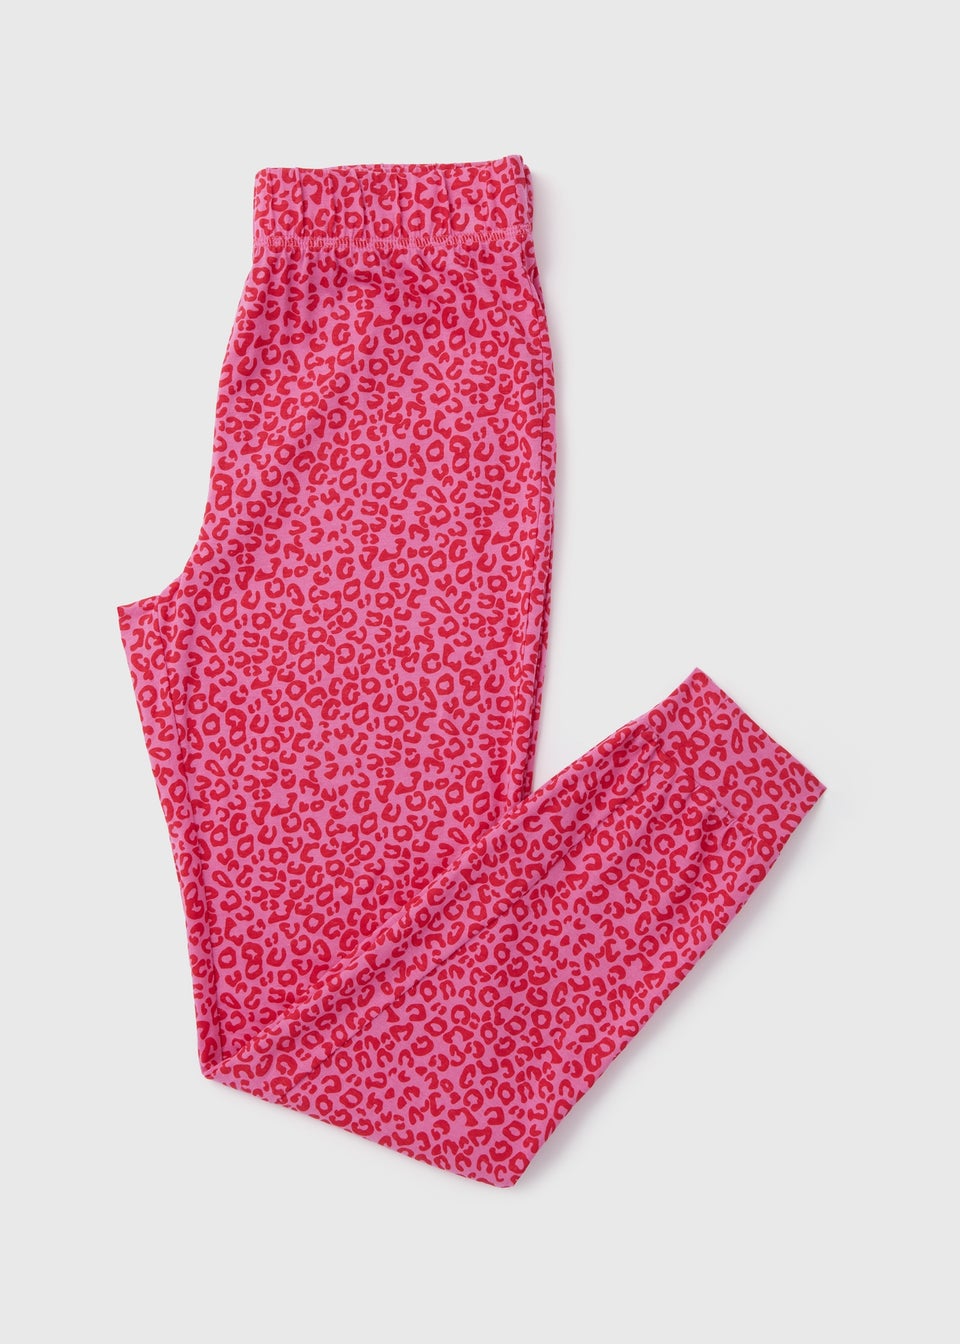 Pink Leopard Print Pyjama Bottoms